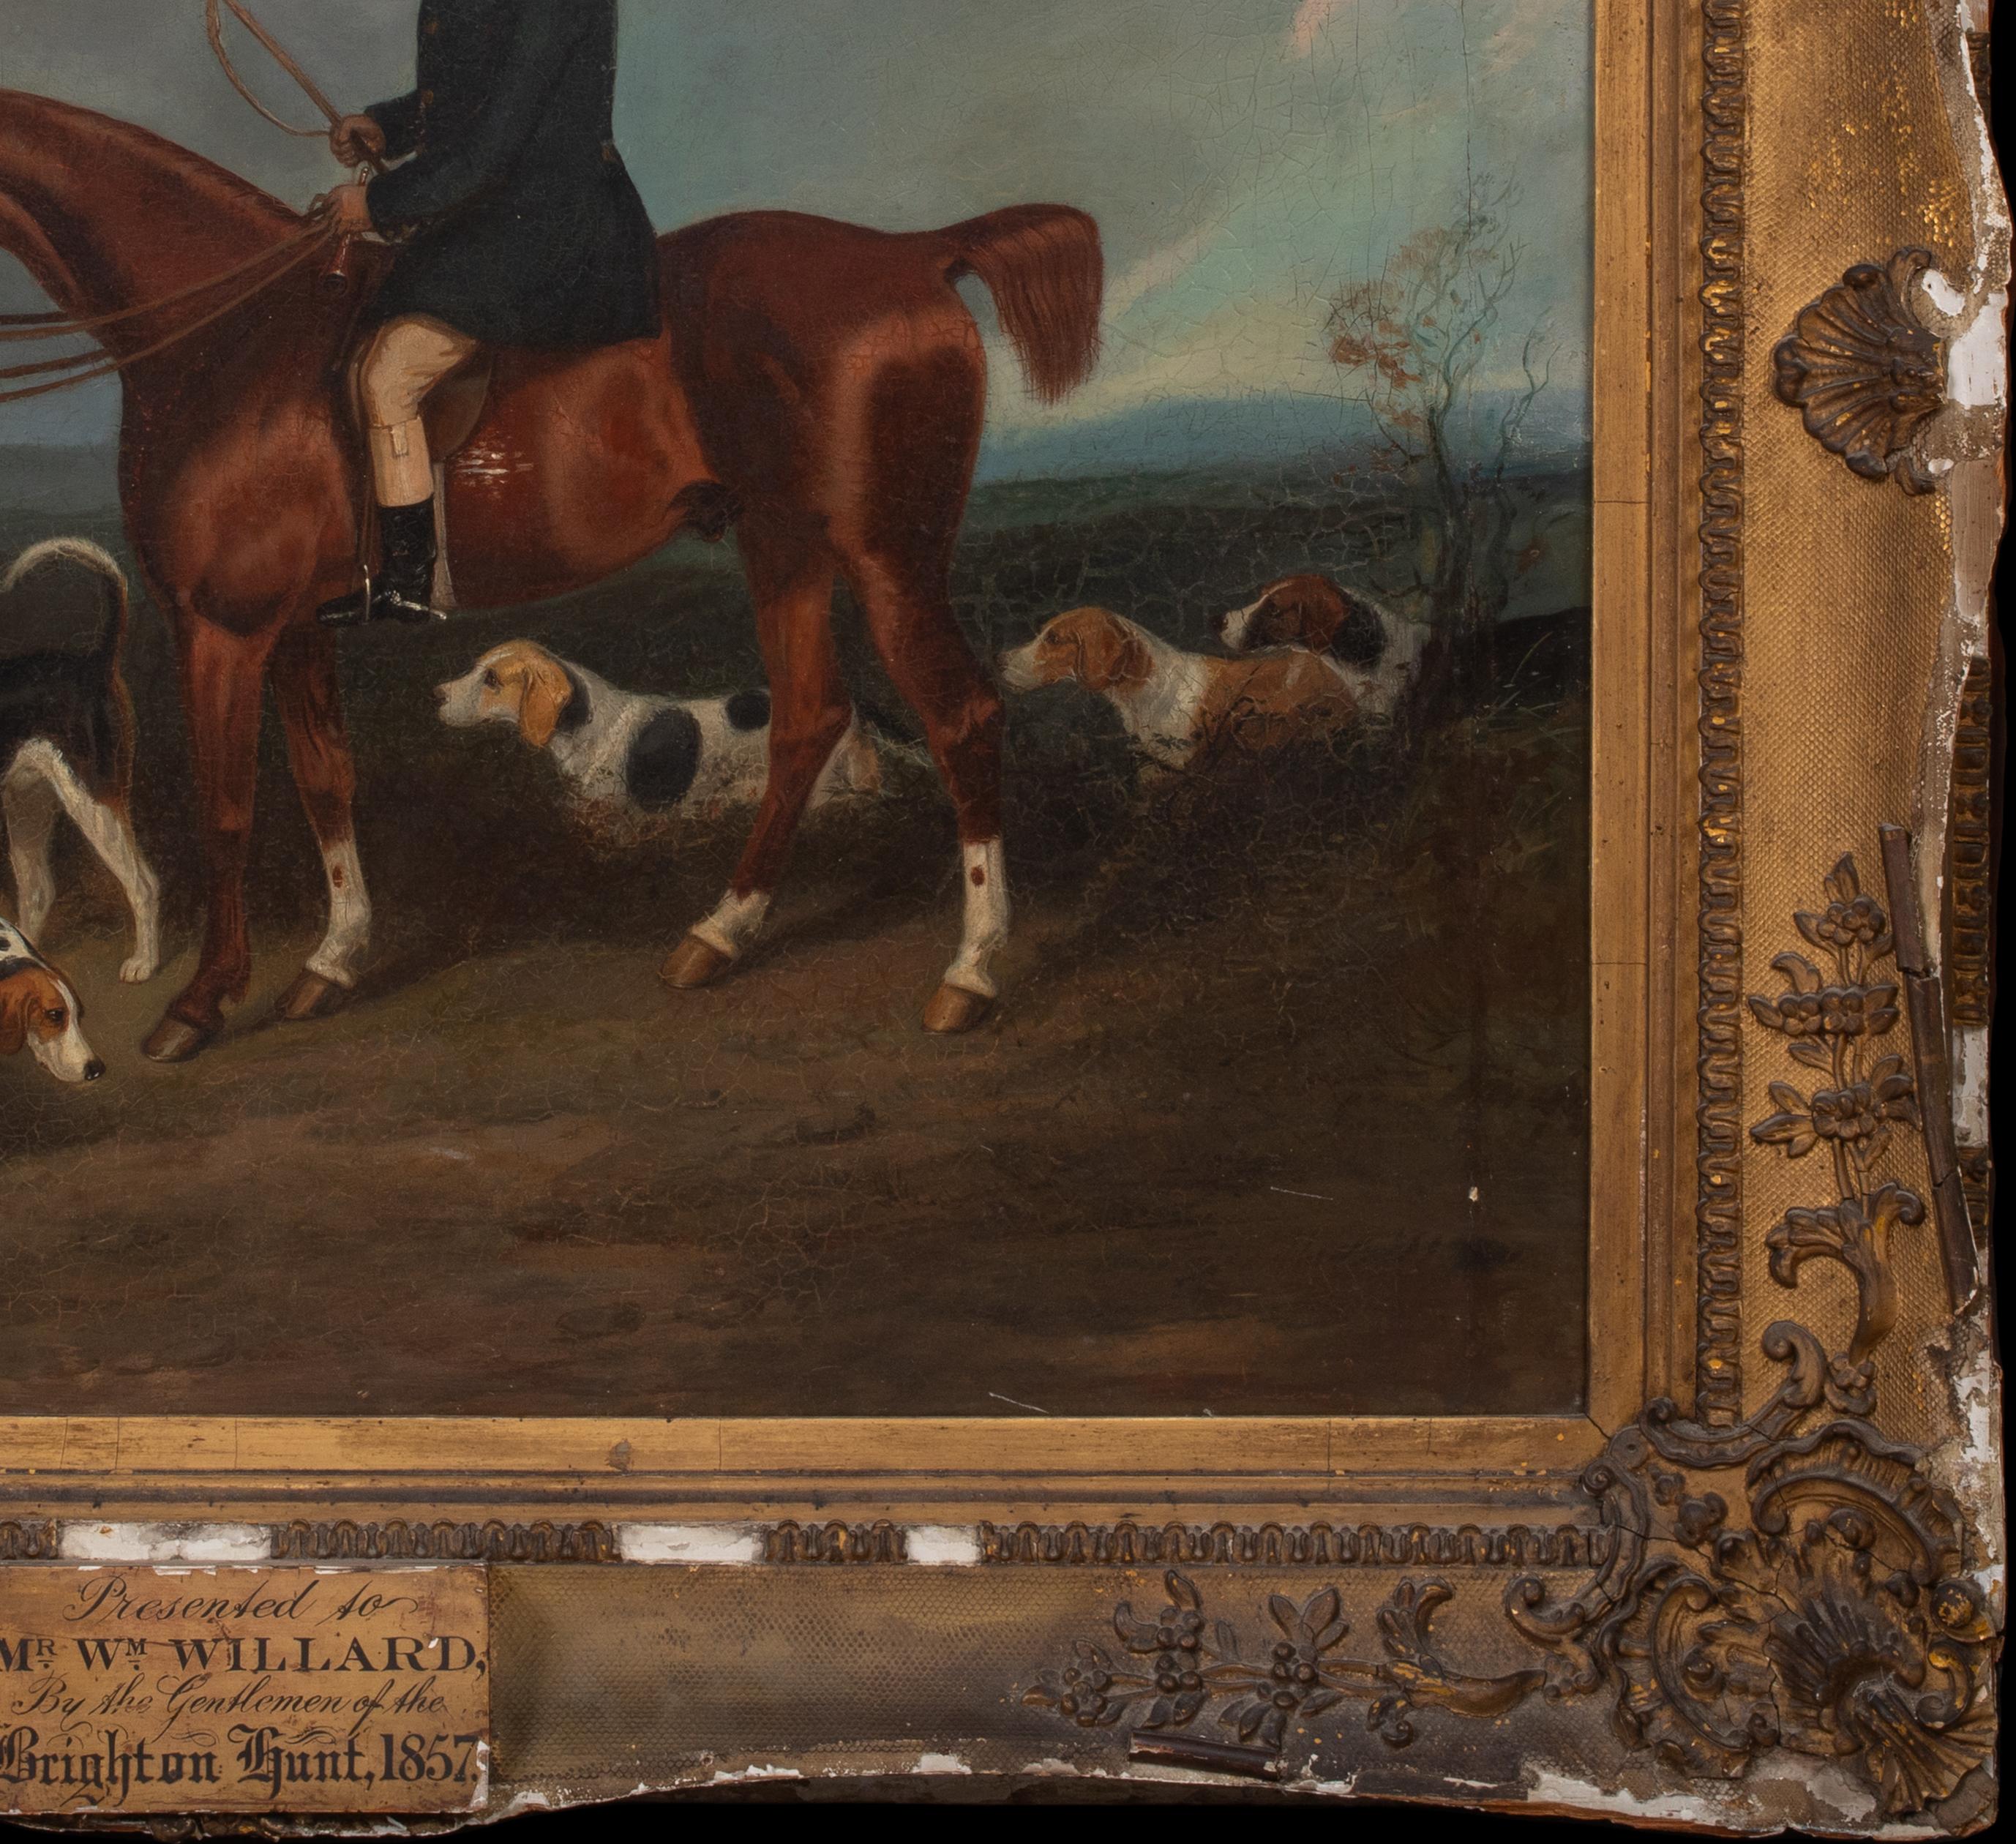 Portrait of Mr William Willard, Horse & Hounds, At The Brighton Hunt, 1857   For Sale 1